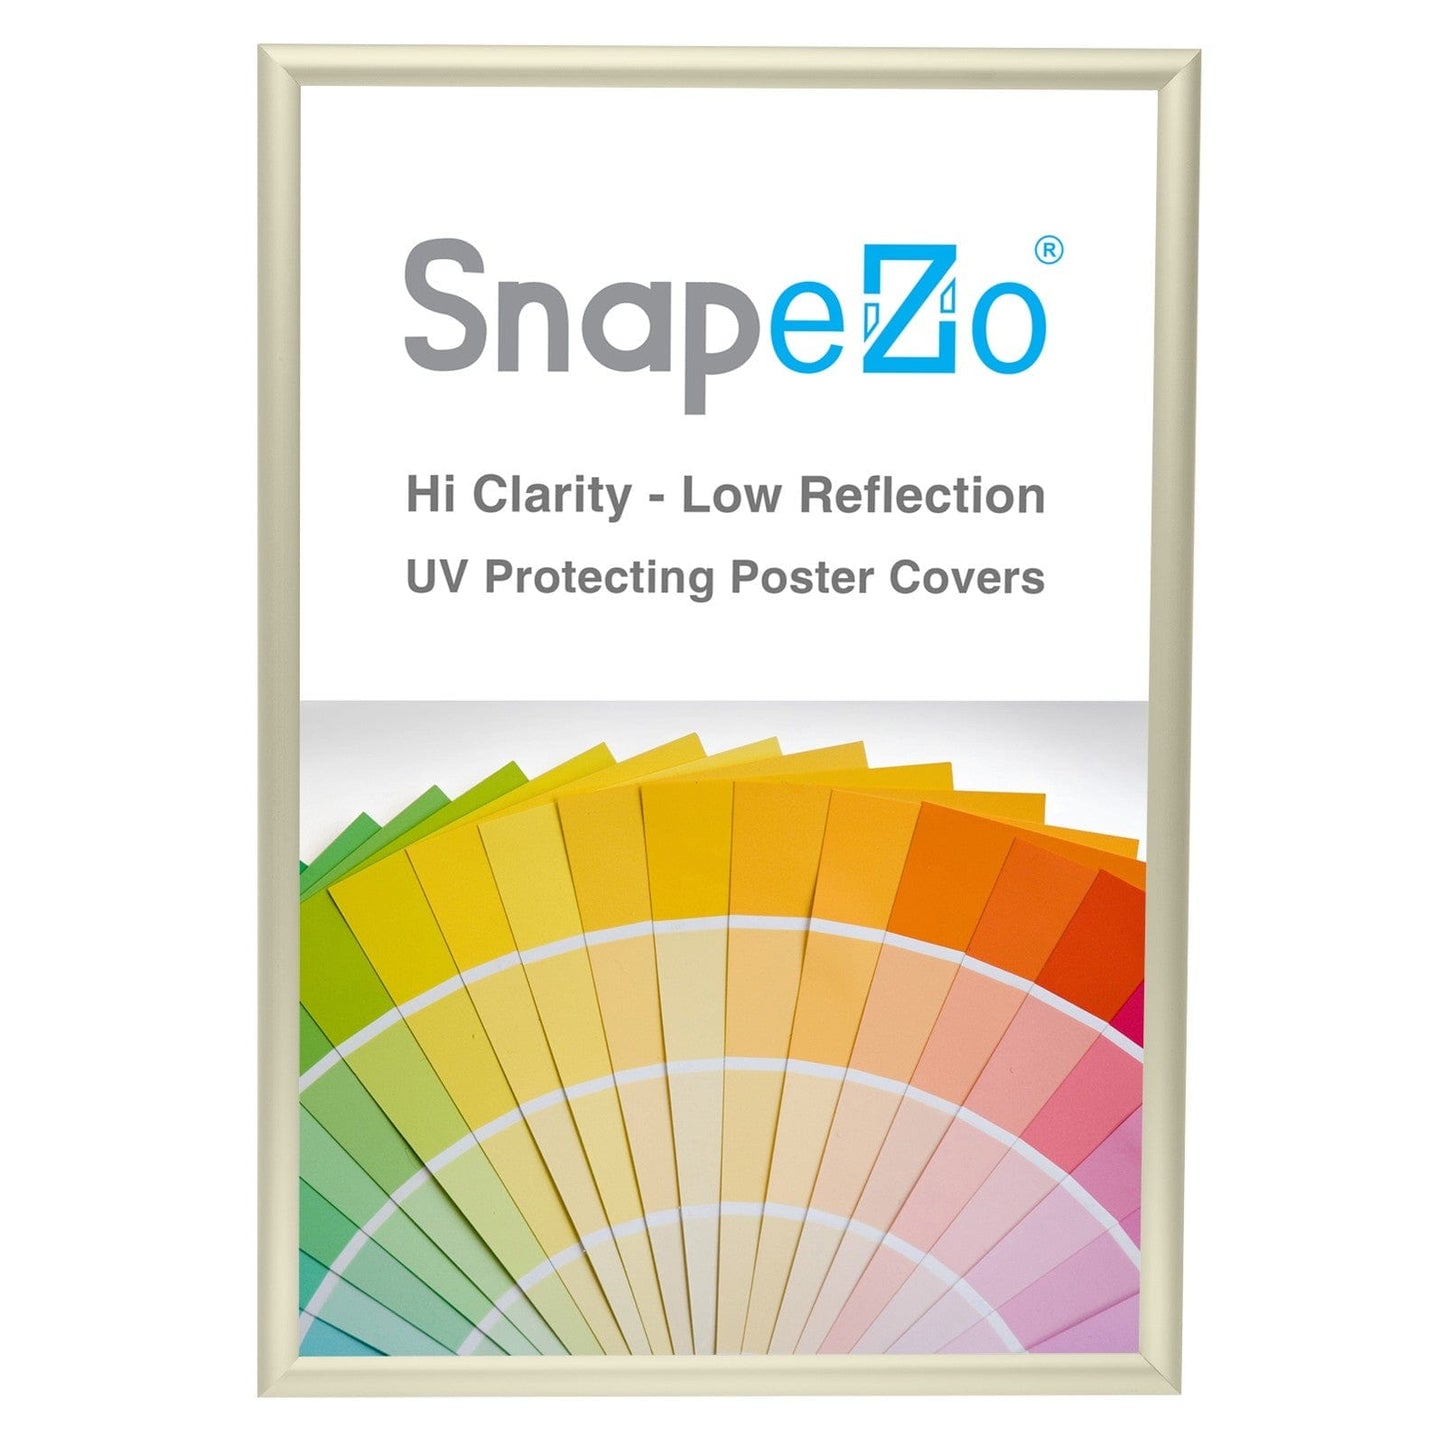 13x19 Cream SnapeZo® Snap Frame - 1" Profile - Snap Frames Direct